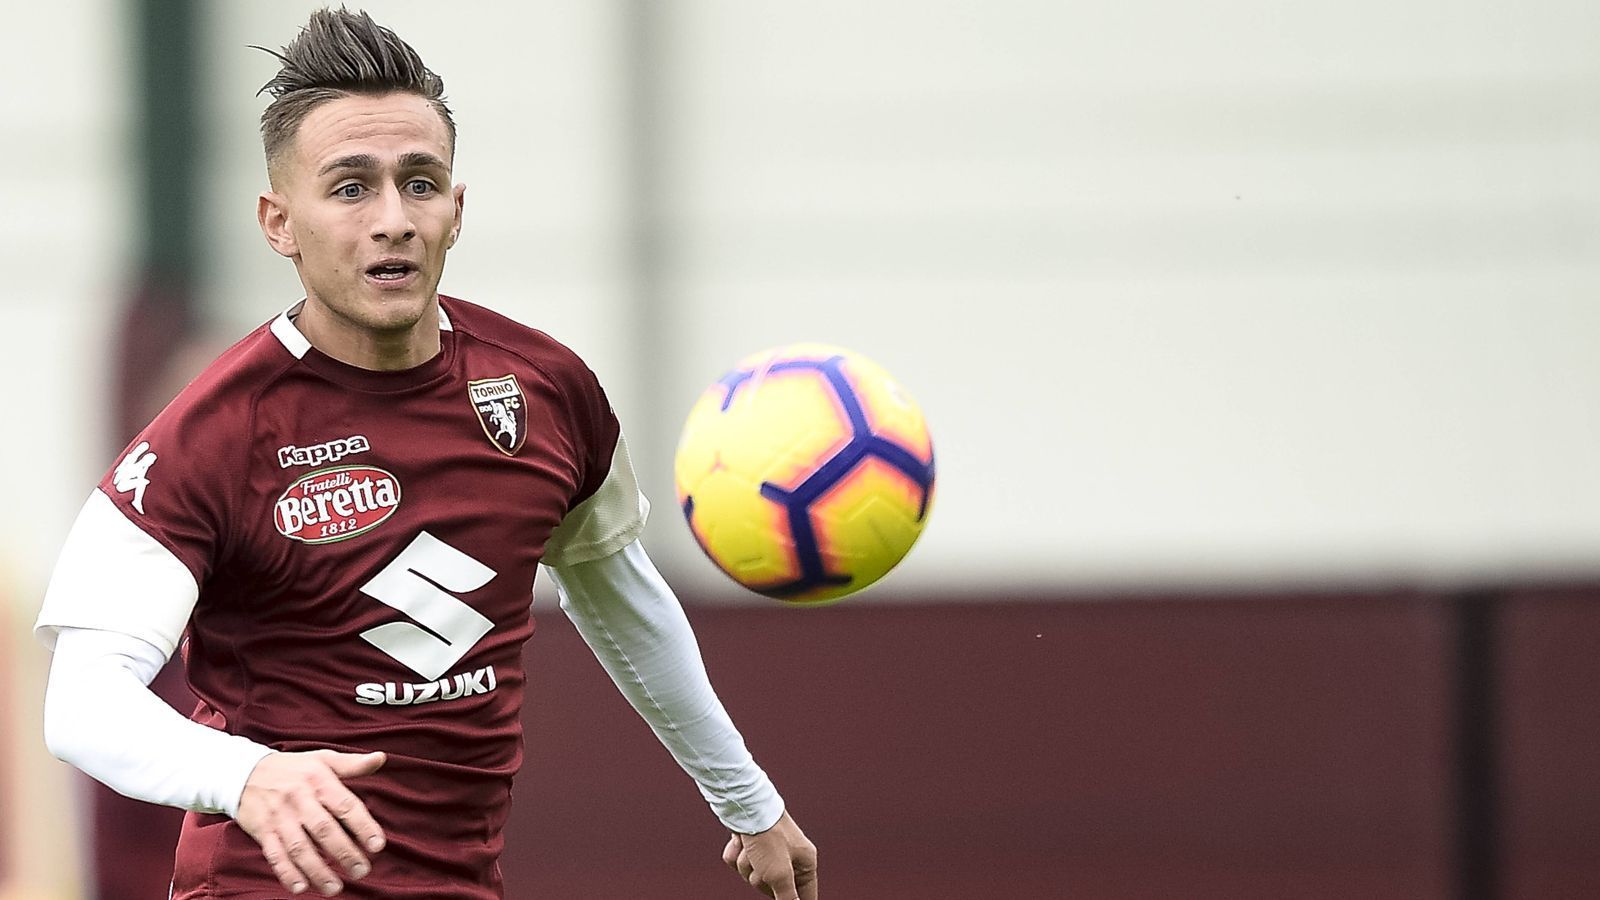 
                <strong>Simone Edera (FC Turin)</strong><br>
                Verletzung: SchulterverletzungMögliche Ausfallzeit: bis Oktober 2019
              